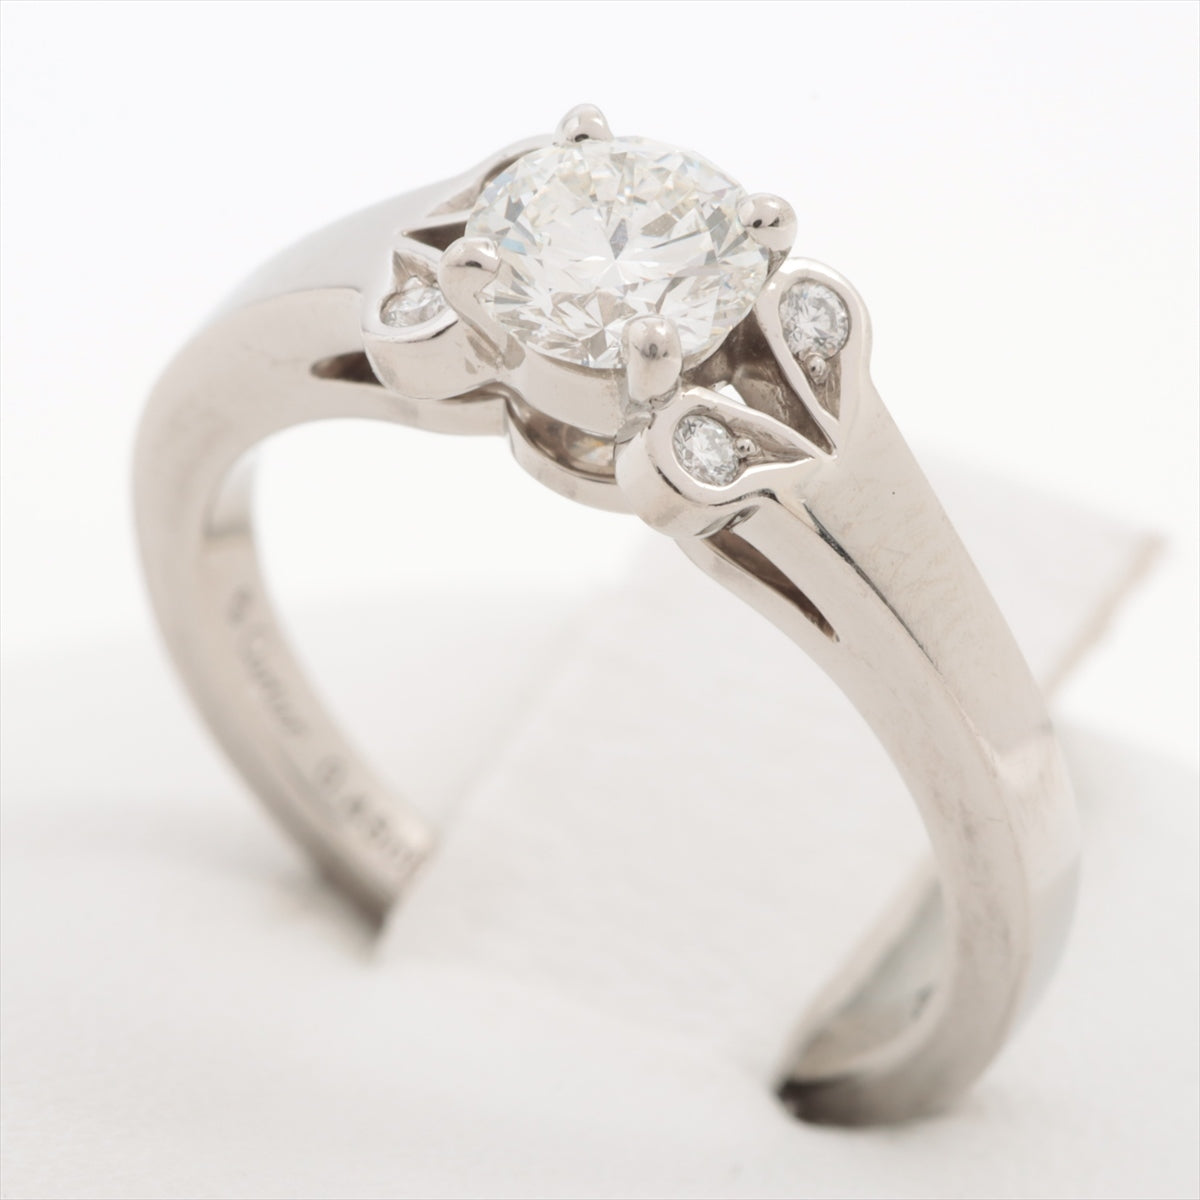 Cartier Ballerina diamond rings Pt950 4.5g 0.45 46